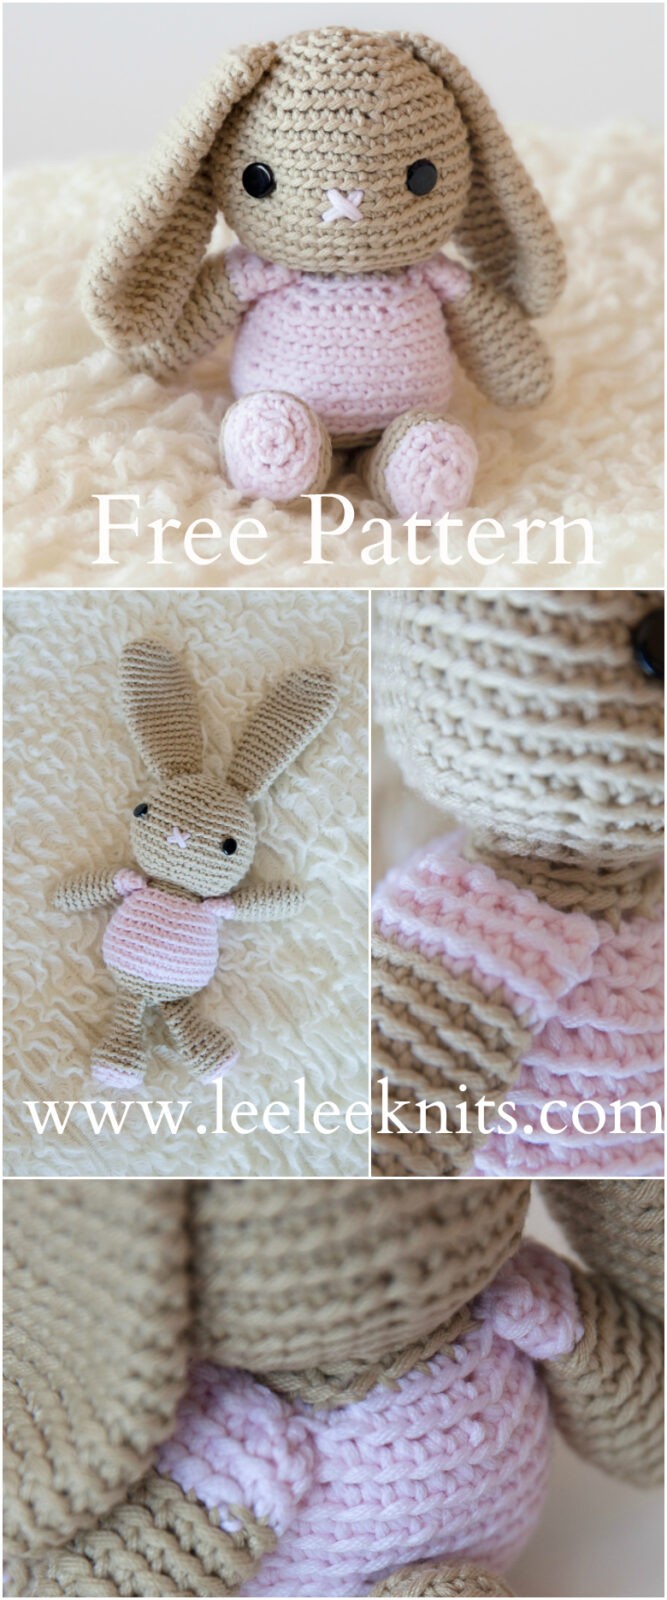 https://leeleeknits.com/wp-content/uploads/2016/05/Free-Crochet-Bunny-Pattern.jpg